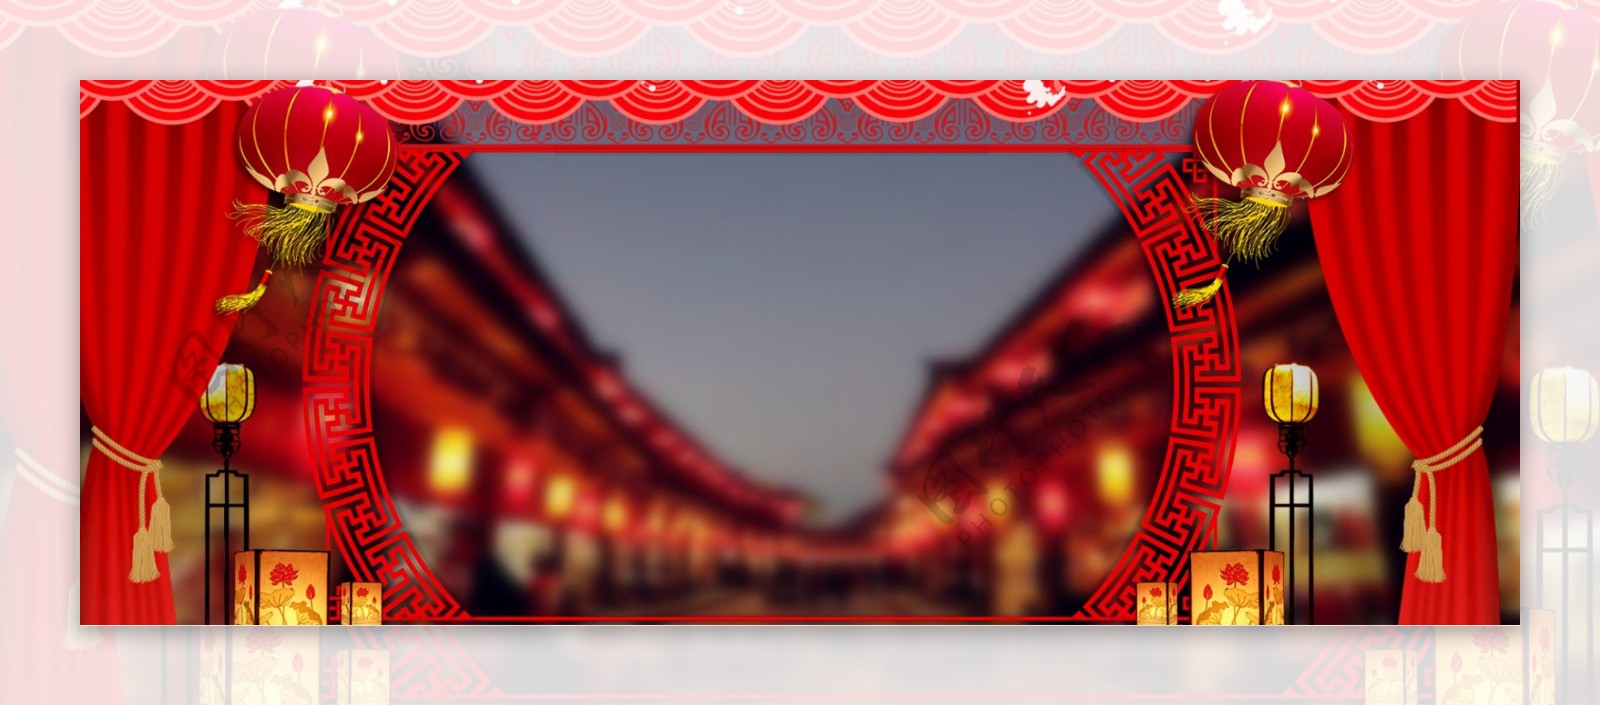 红色喜庆春节banner背景